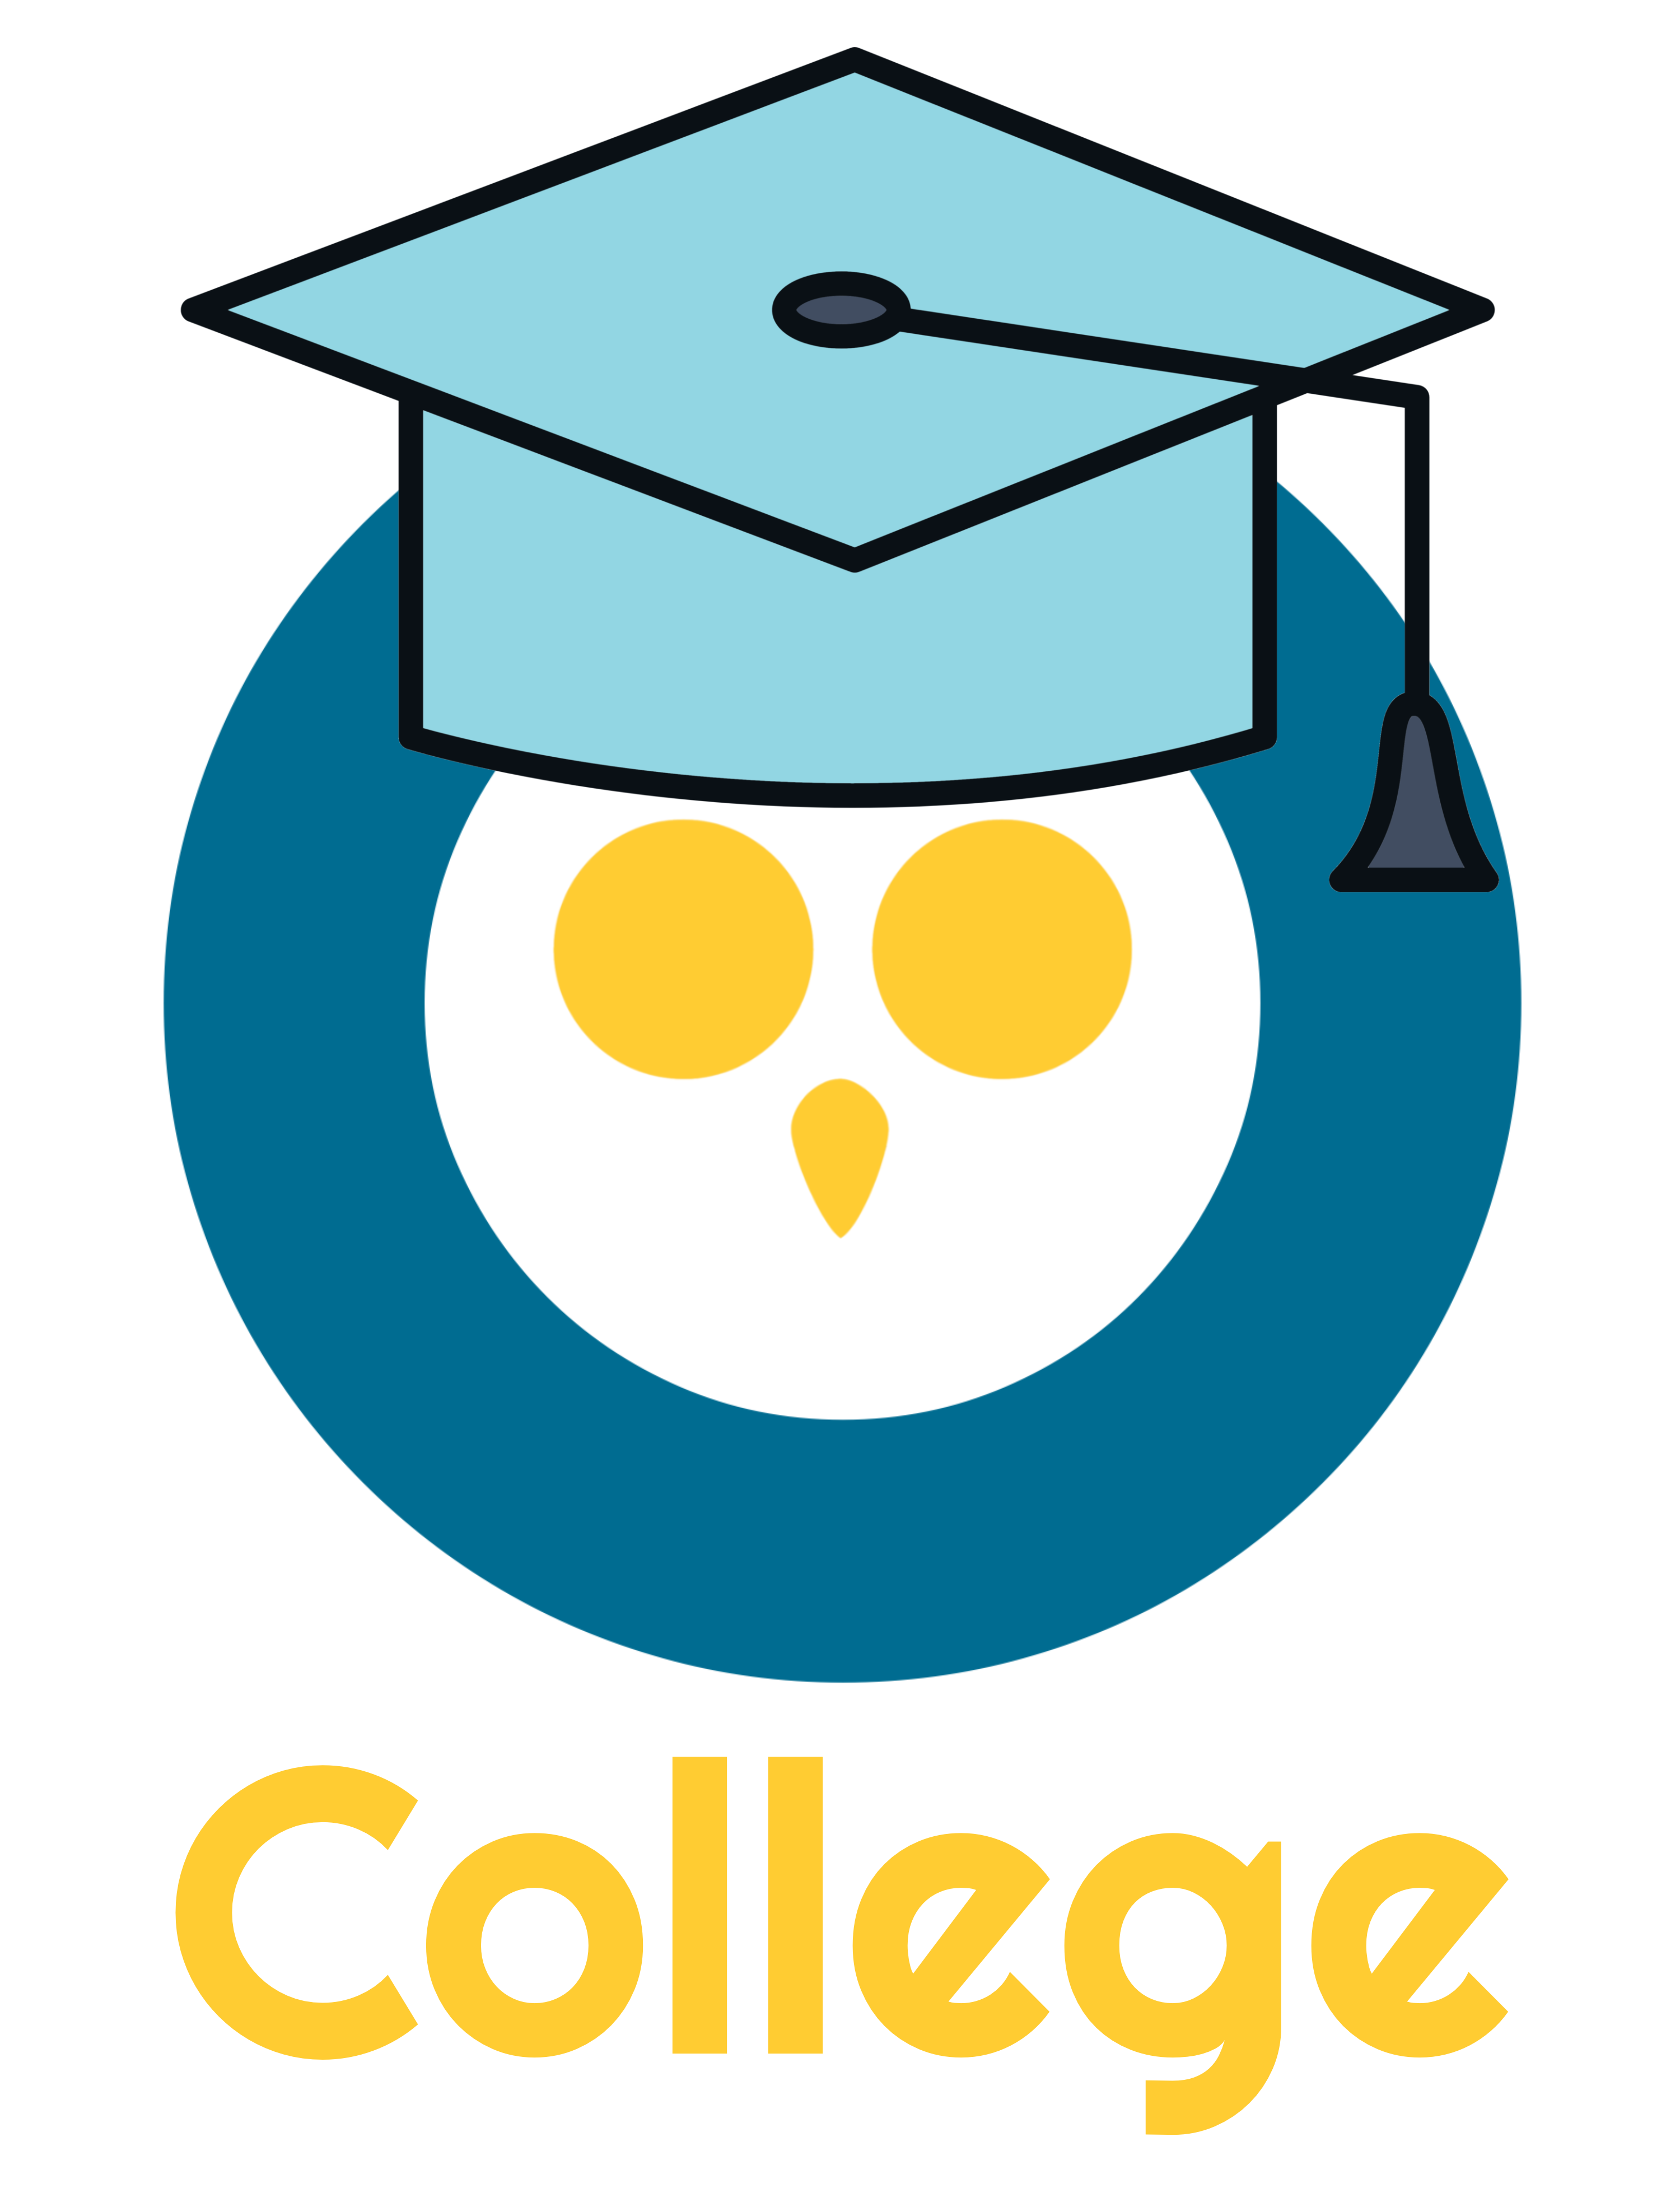 The Owl College logo